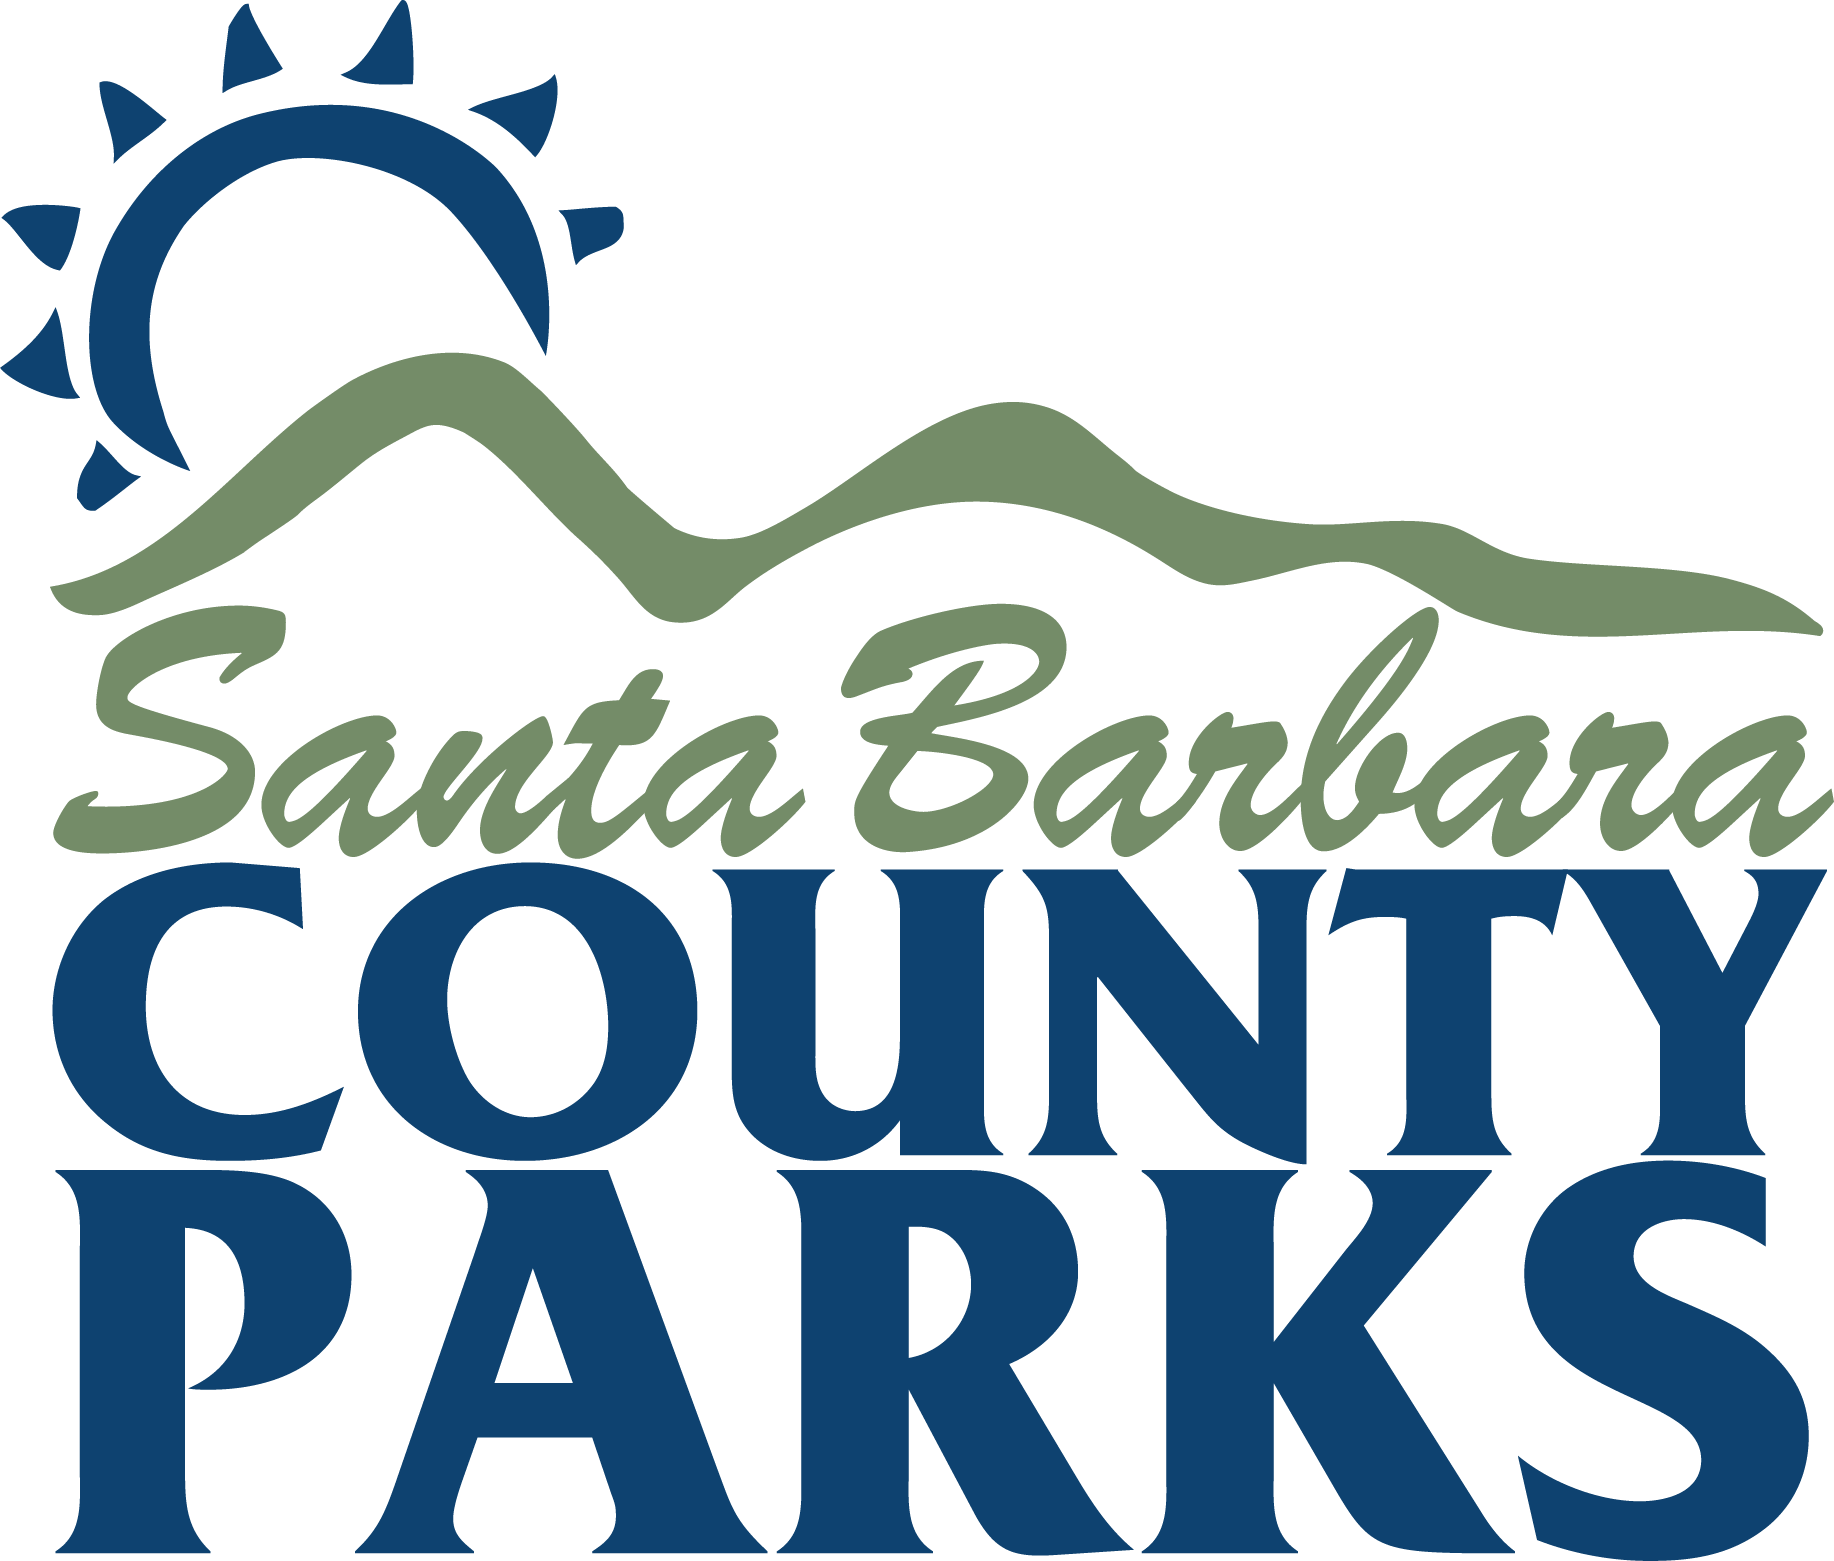 Santa Barbara County Parks Logo